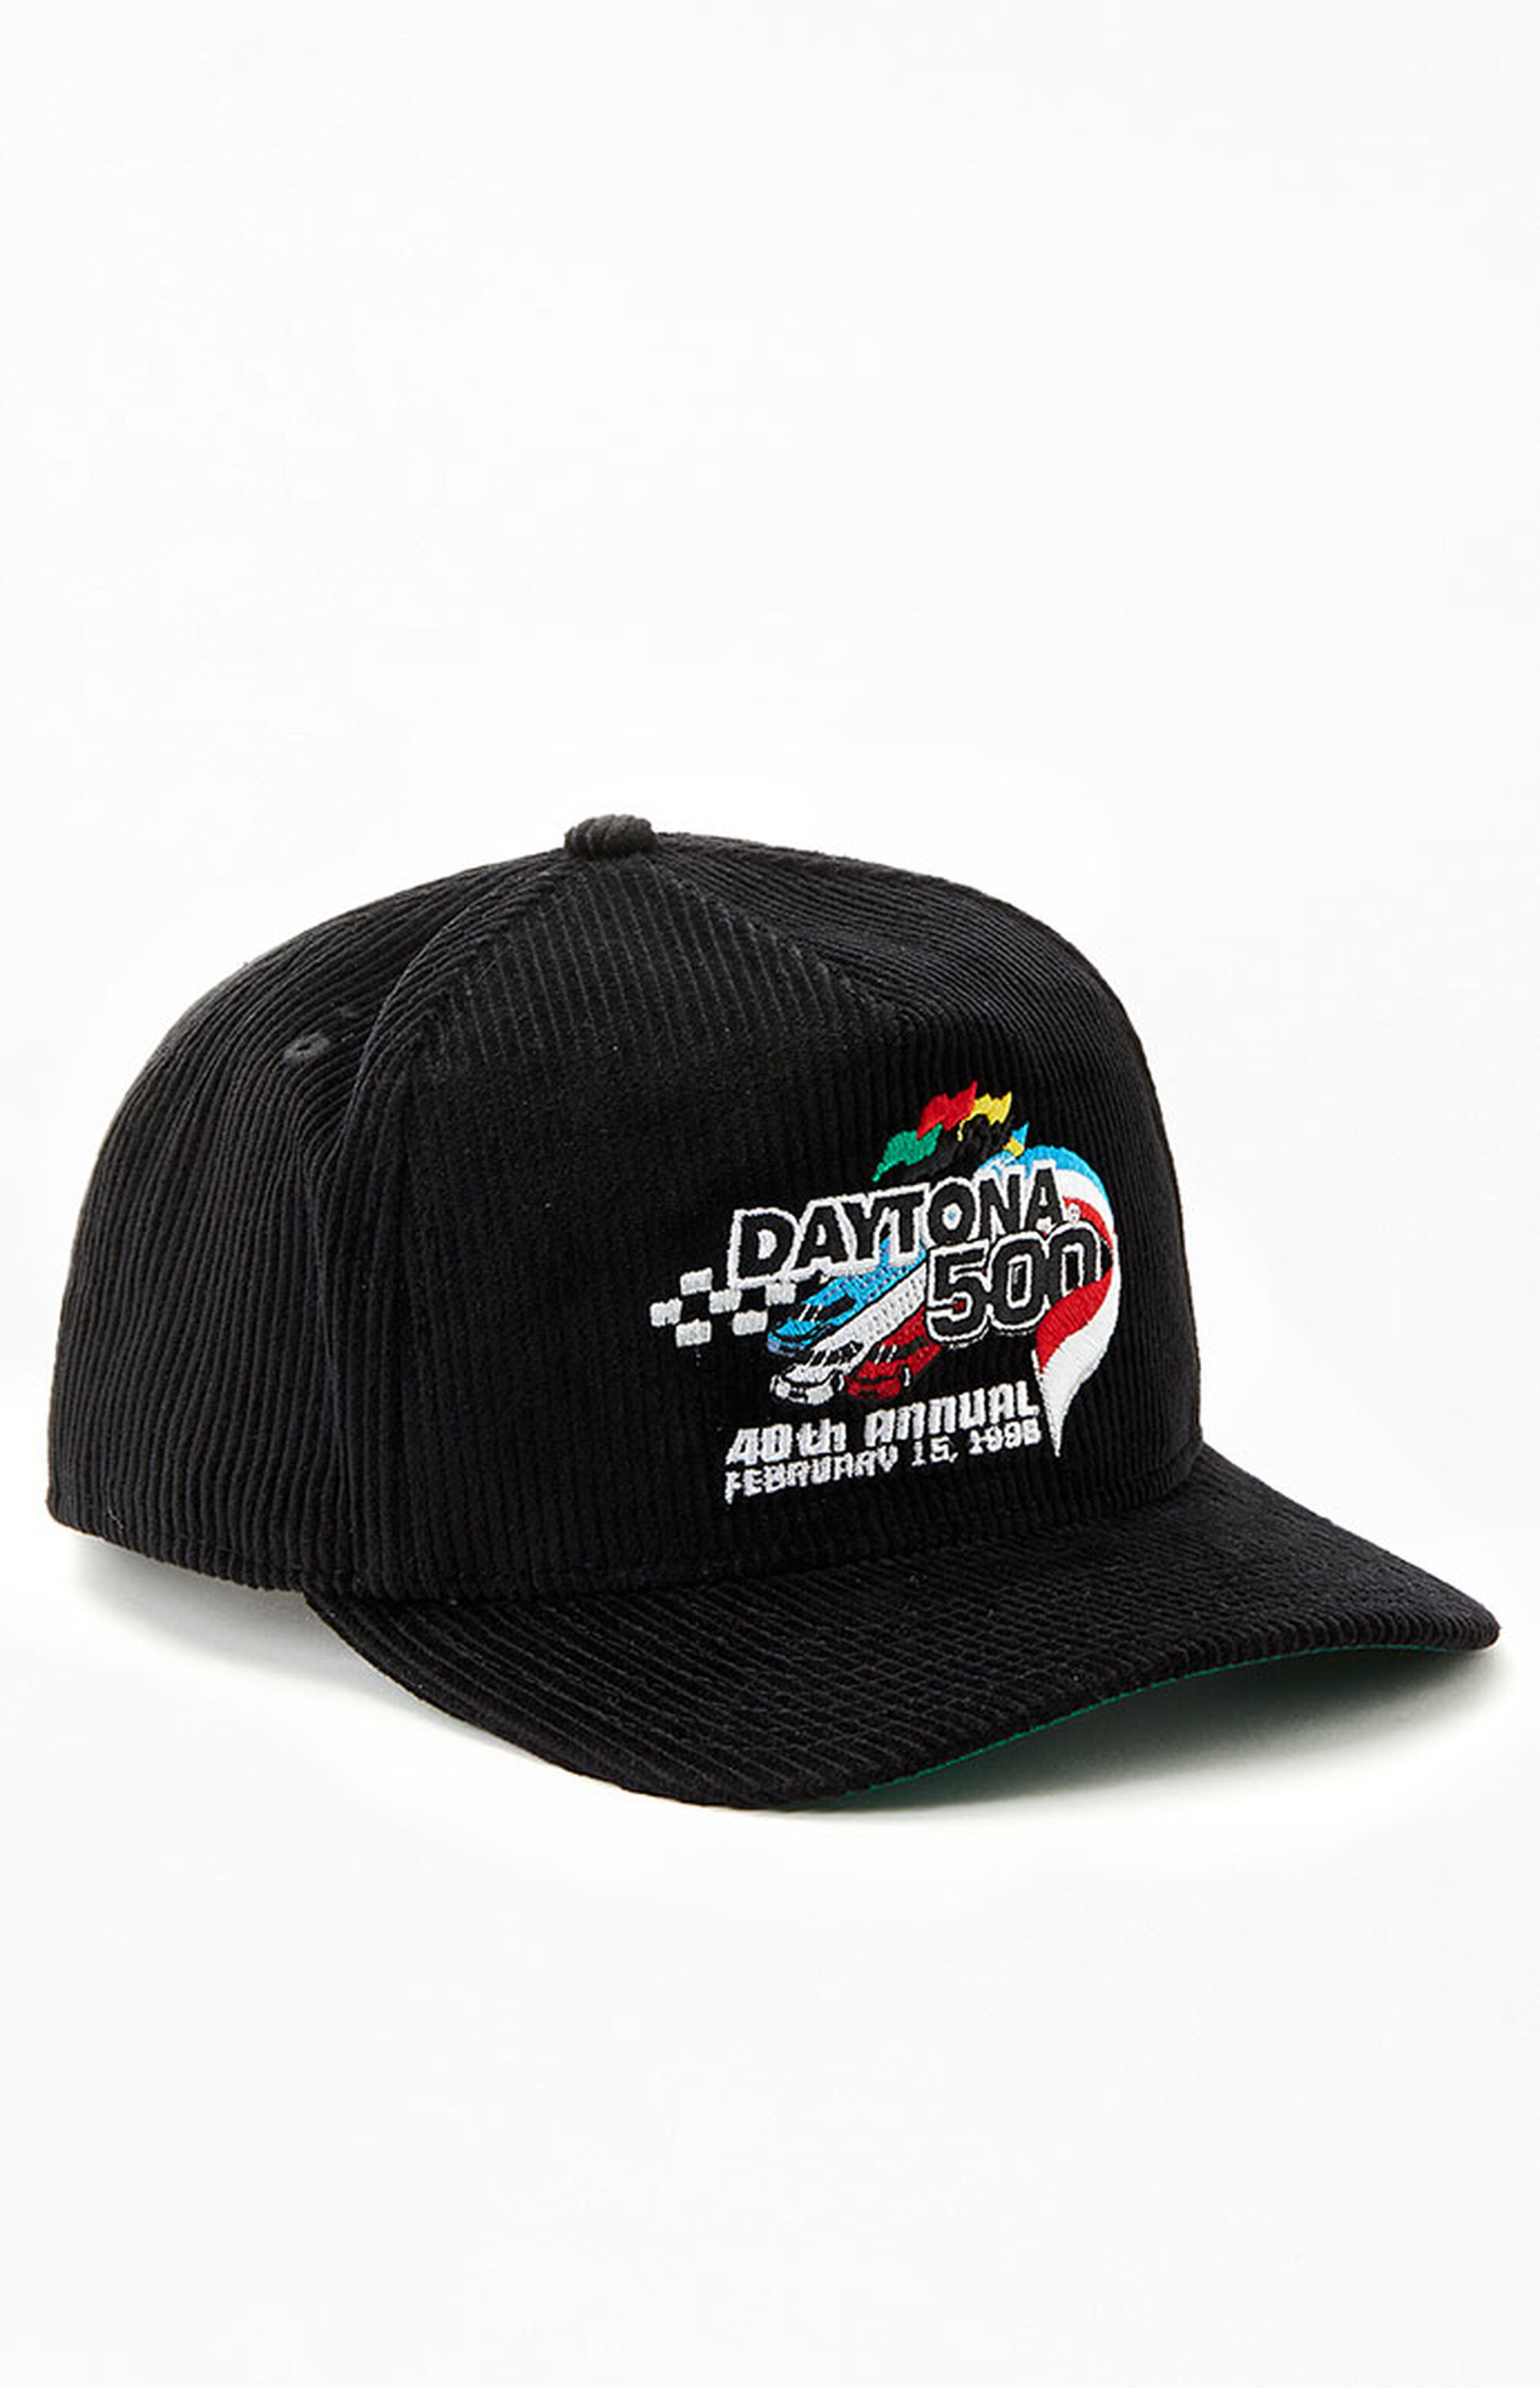 New Era Daytona Corduroy Golfer Snapback Hat | PacSun